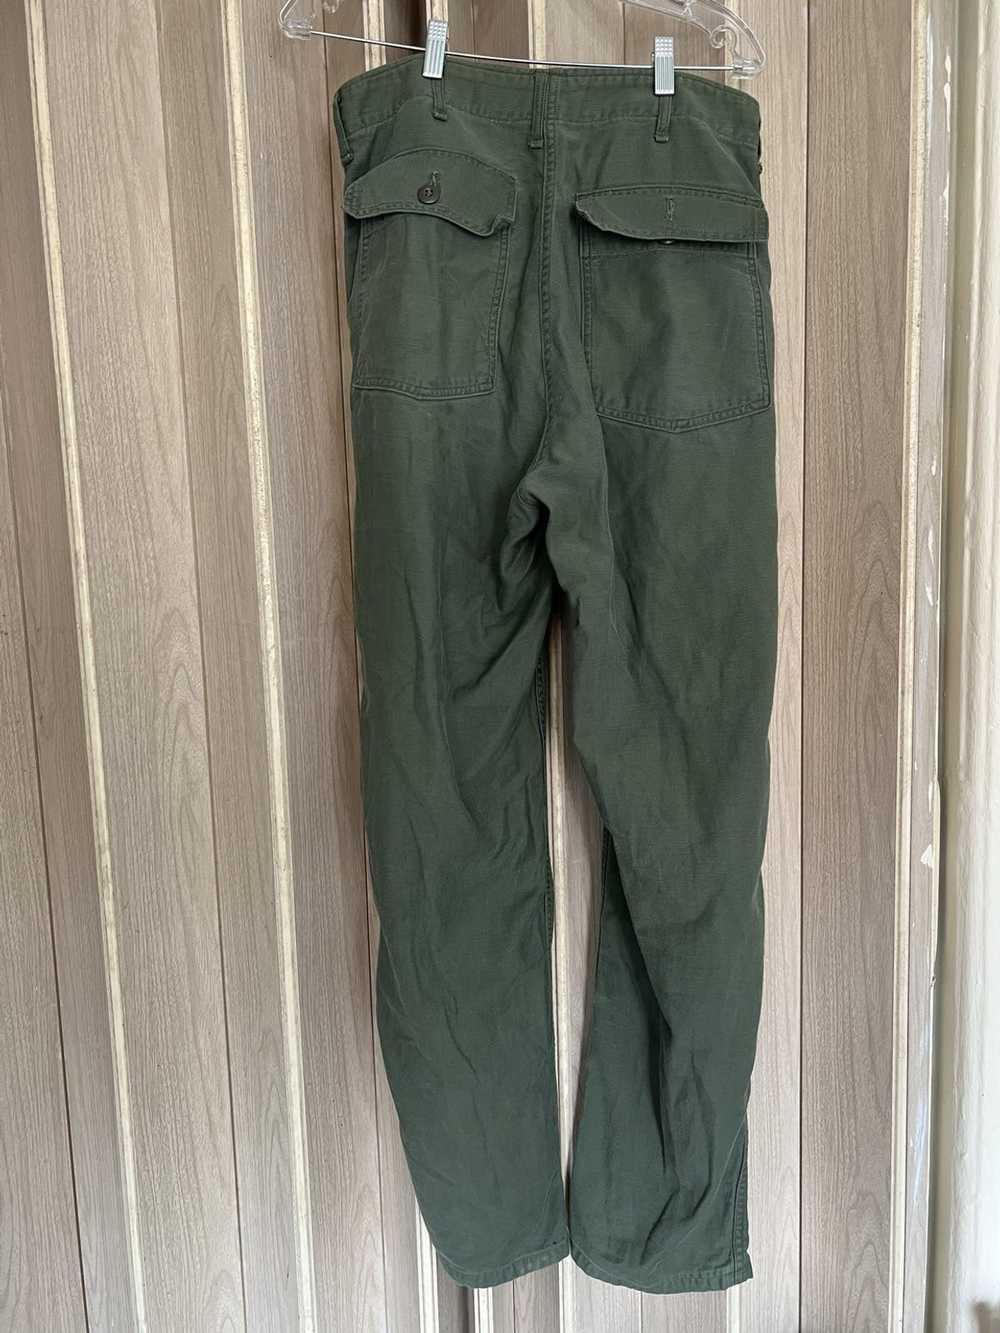 Vintage Vintage green army trouser pants - image 6